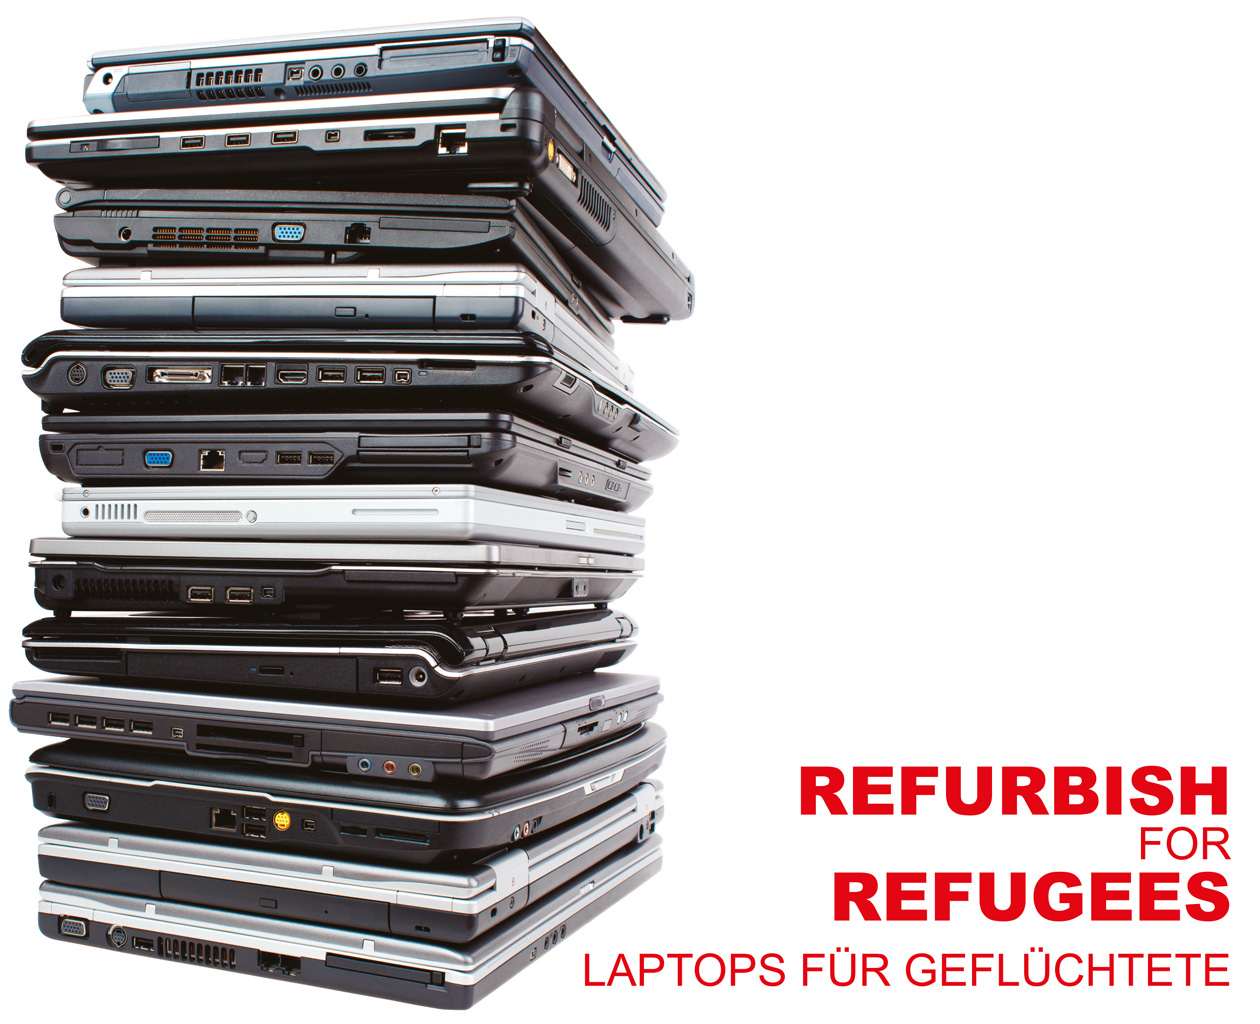 Laptops/Tablets/Iphones/PC Spende   Laptops for Refugees  Laptop spenden  Laptops Kreislaufwirtschaft